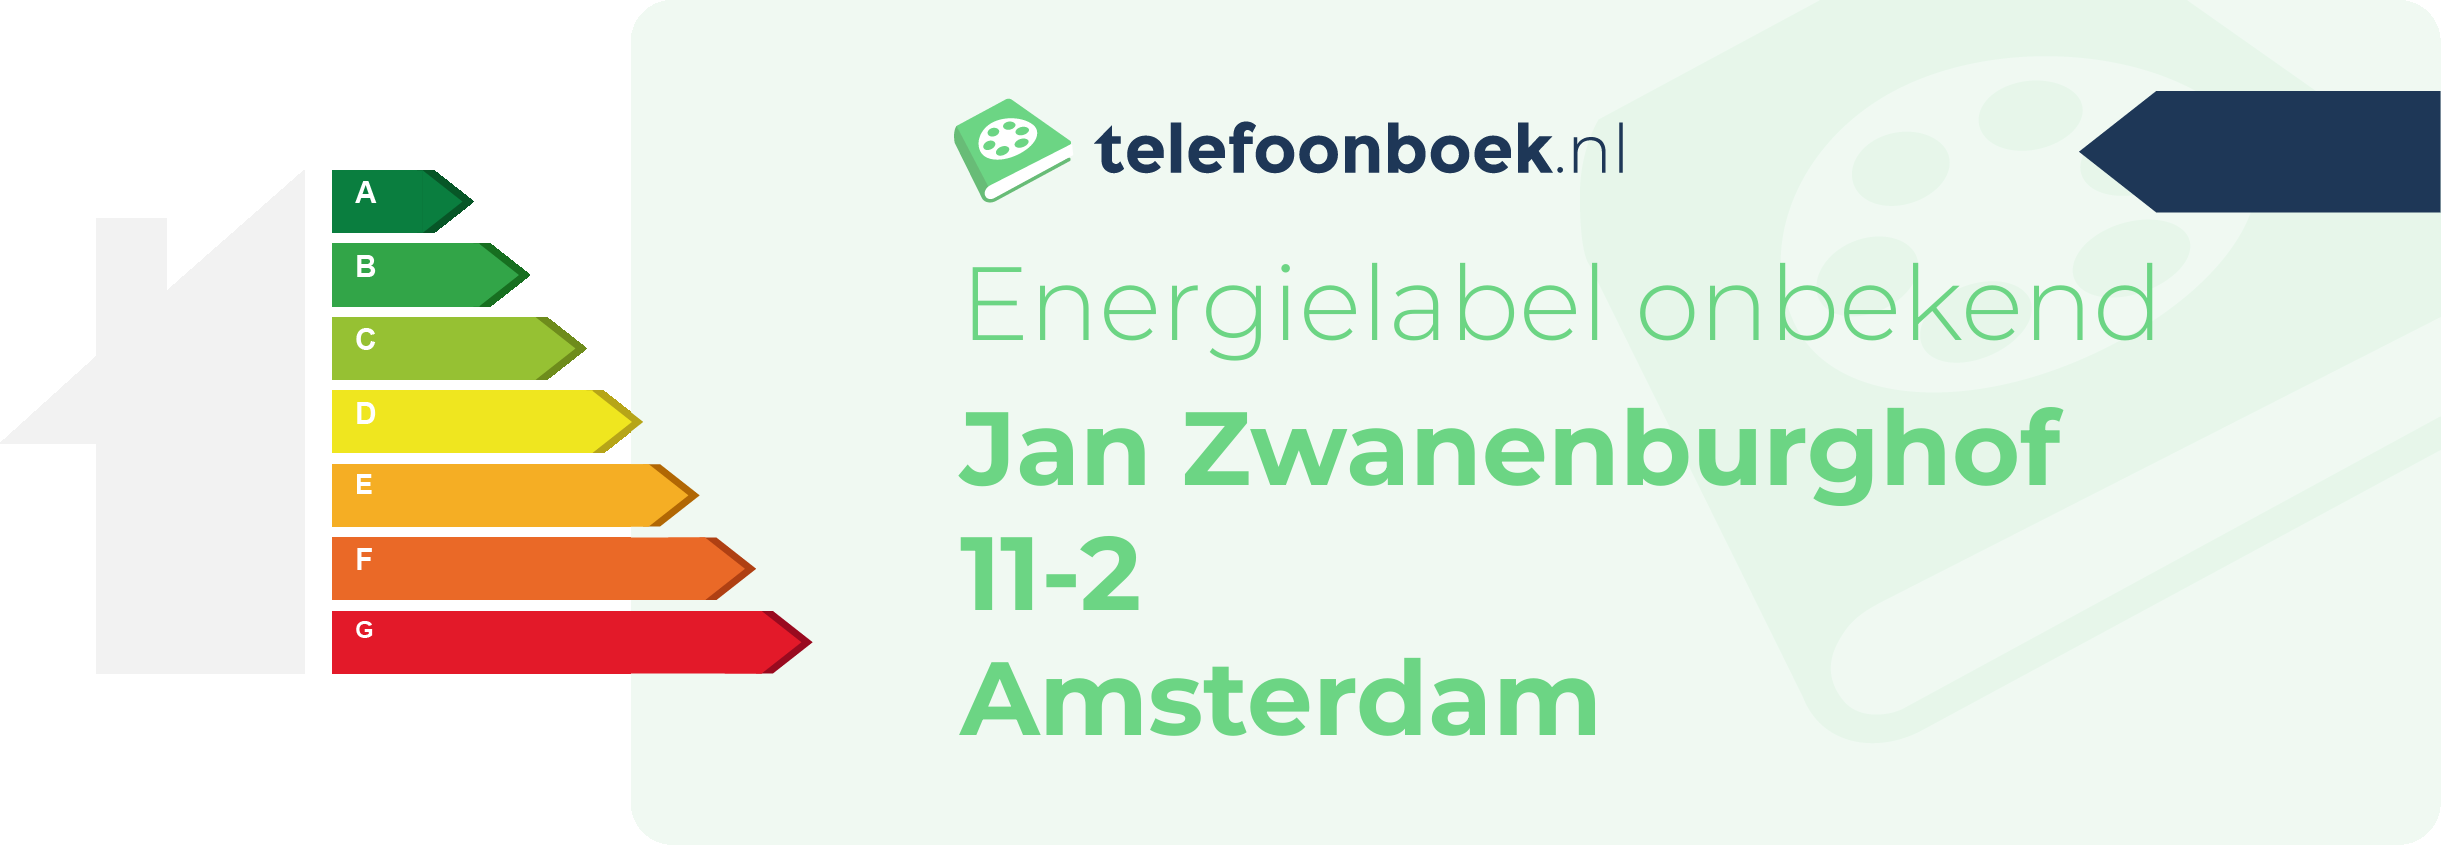 Energielabel Jan Zwanenburghof 11-2 Amsterdam